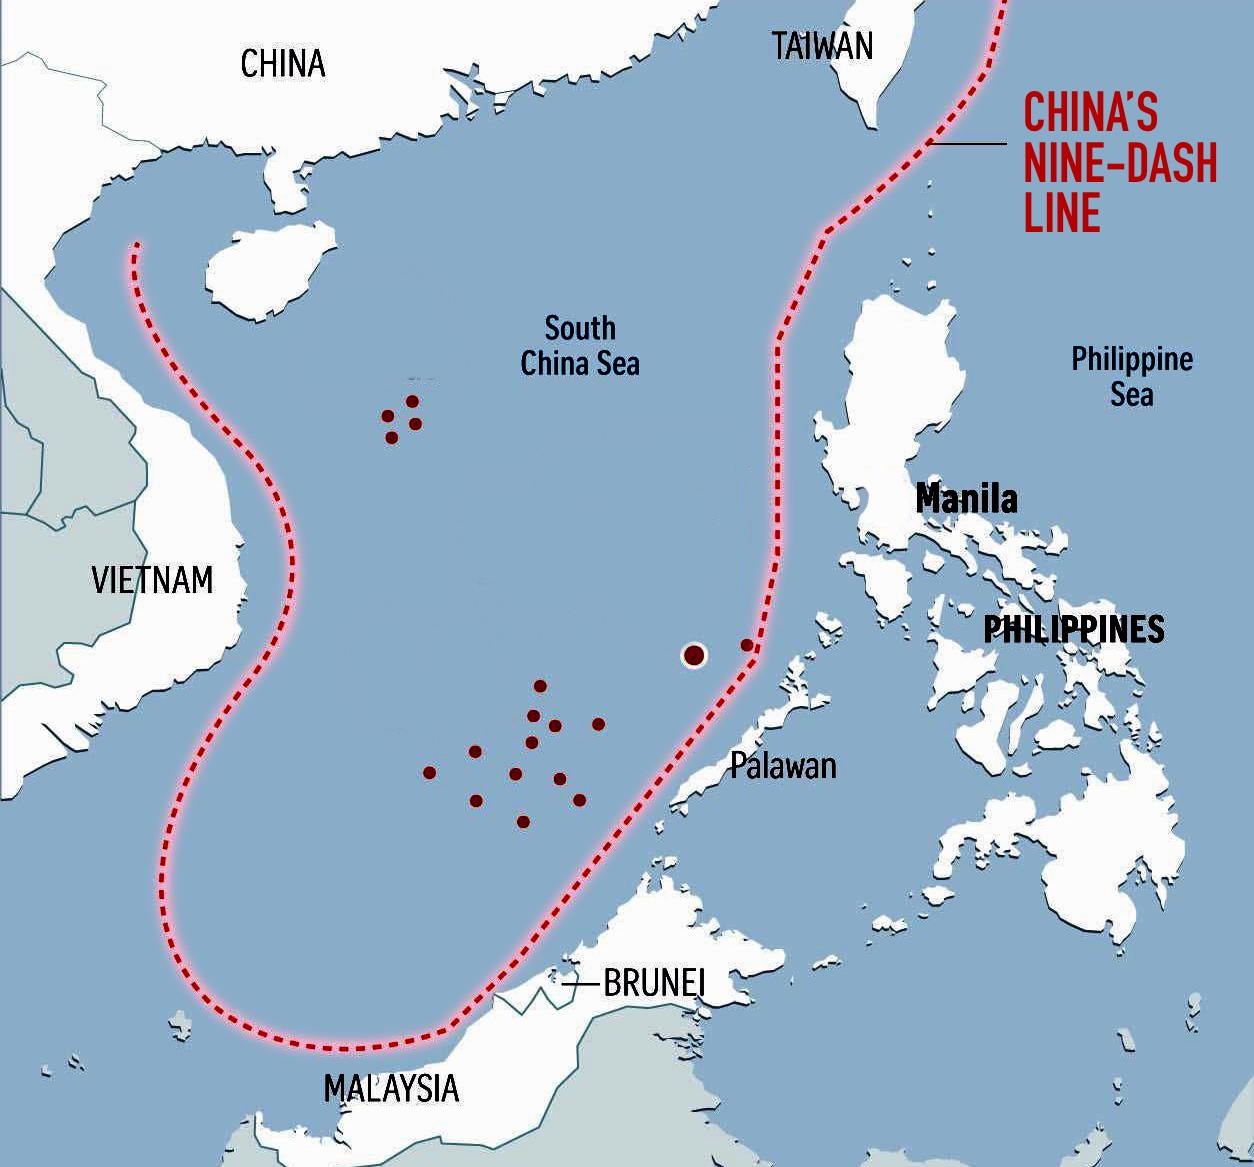 China’s Nine-Dash Line - Map